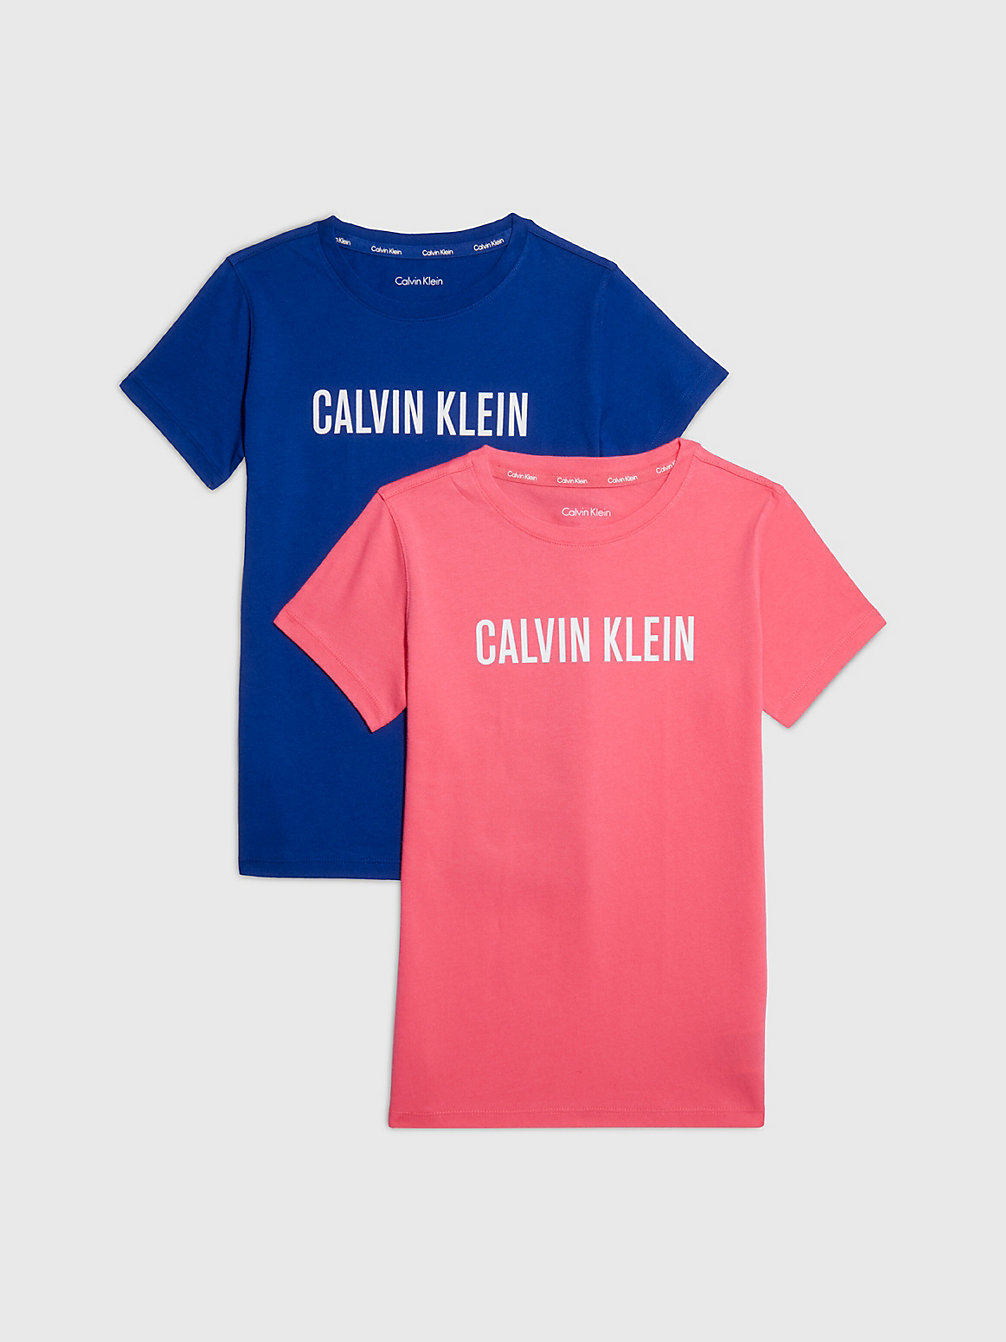 PINKFLASH/BOLDBLUE > 2-Pack T-Shirts - Intense Power > undefined girls - Calvin Klein